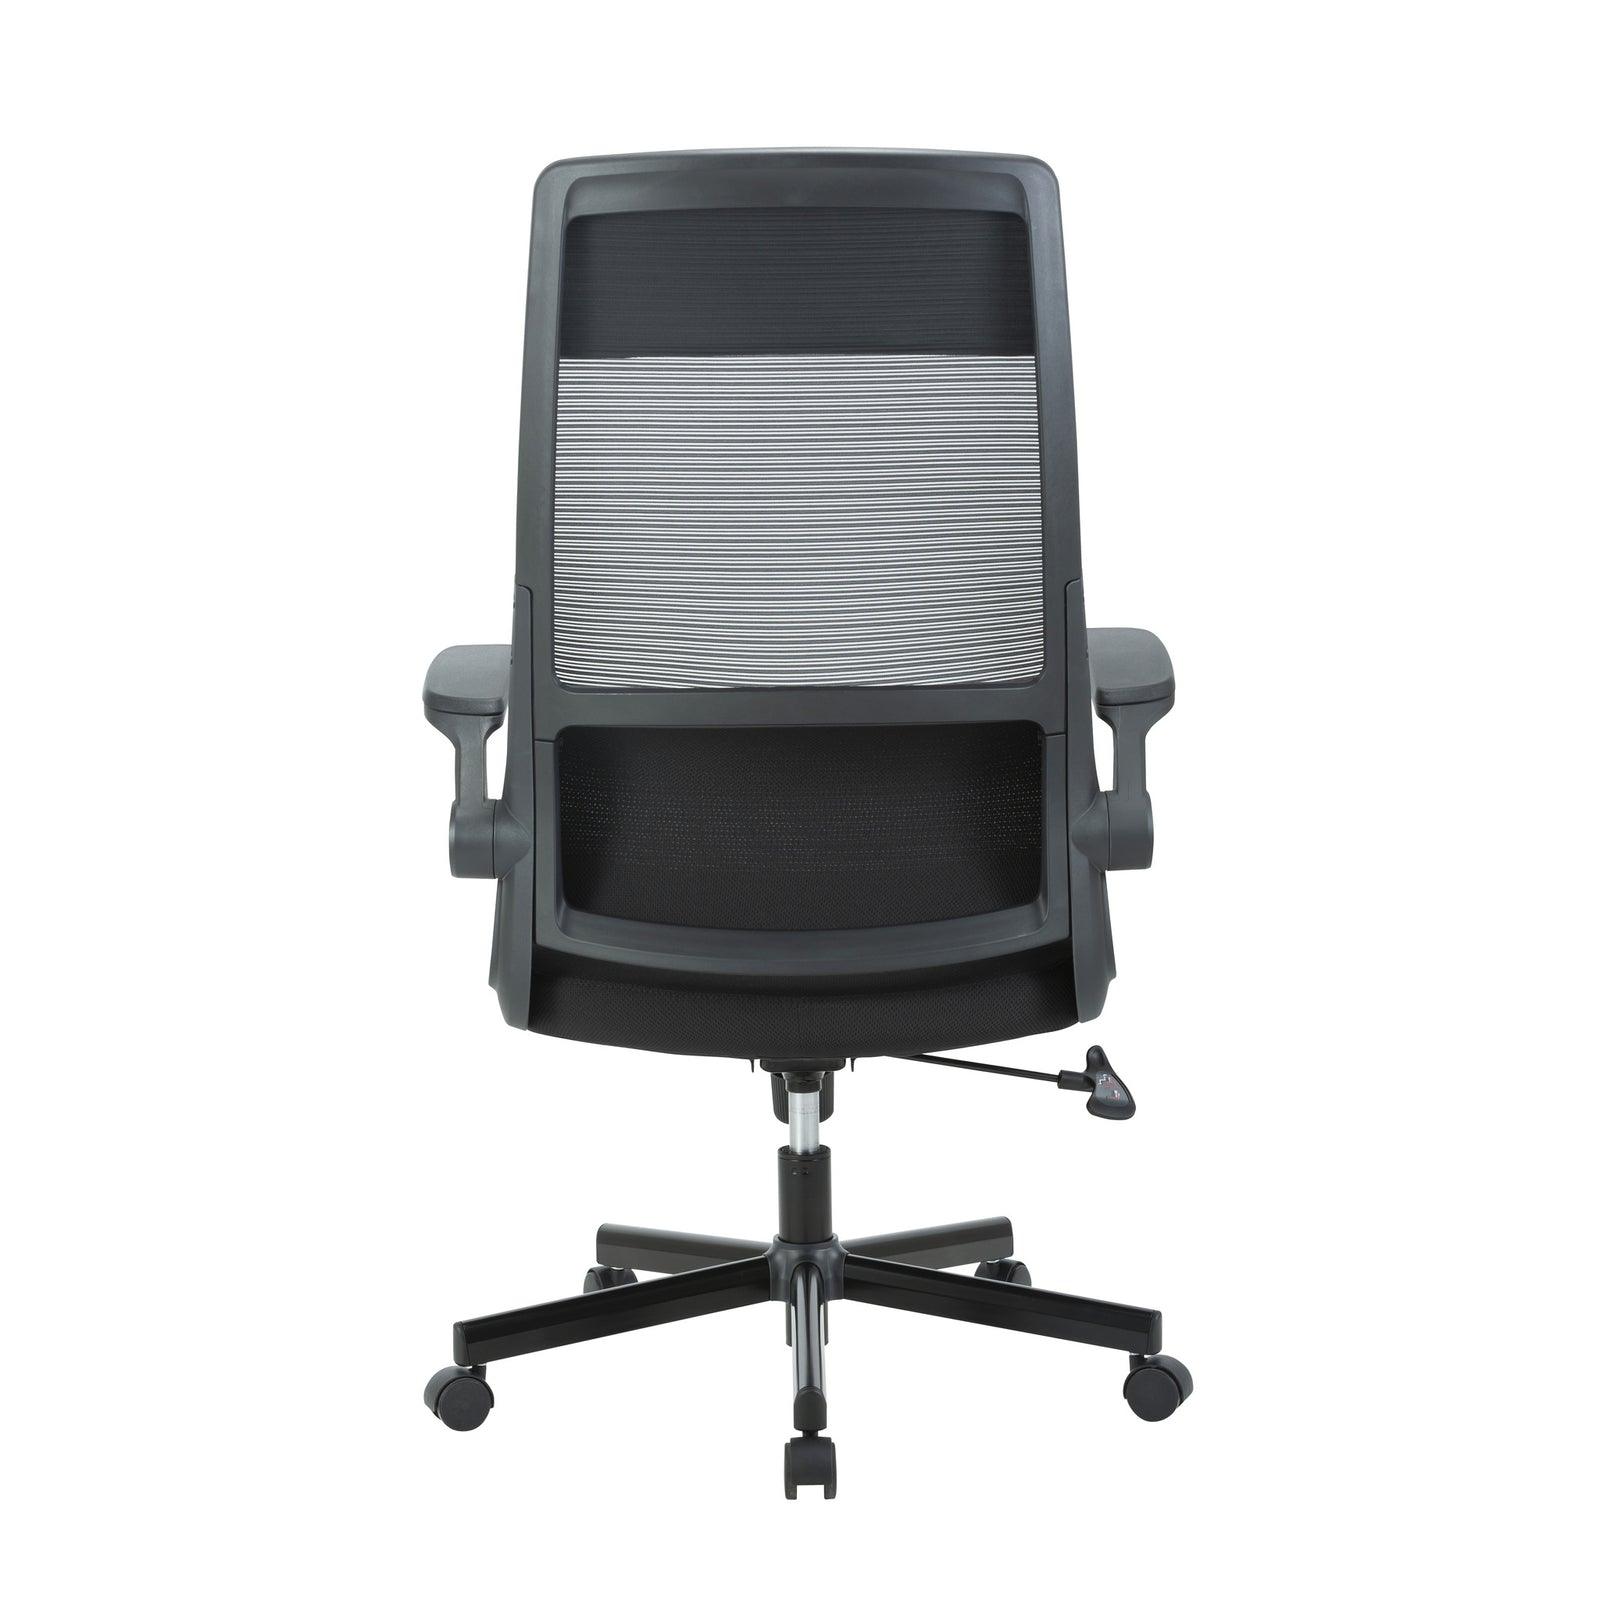 Mesh Ergonomic Office Chair - Black - Office/Gaming ChairsOC8251-UN 4